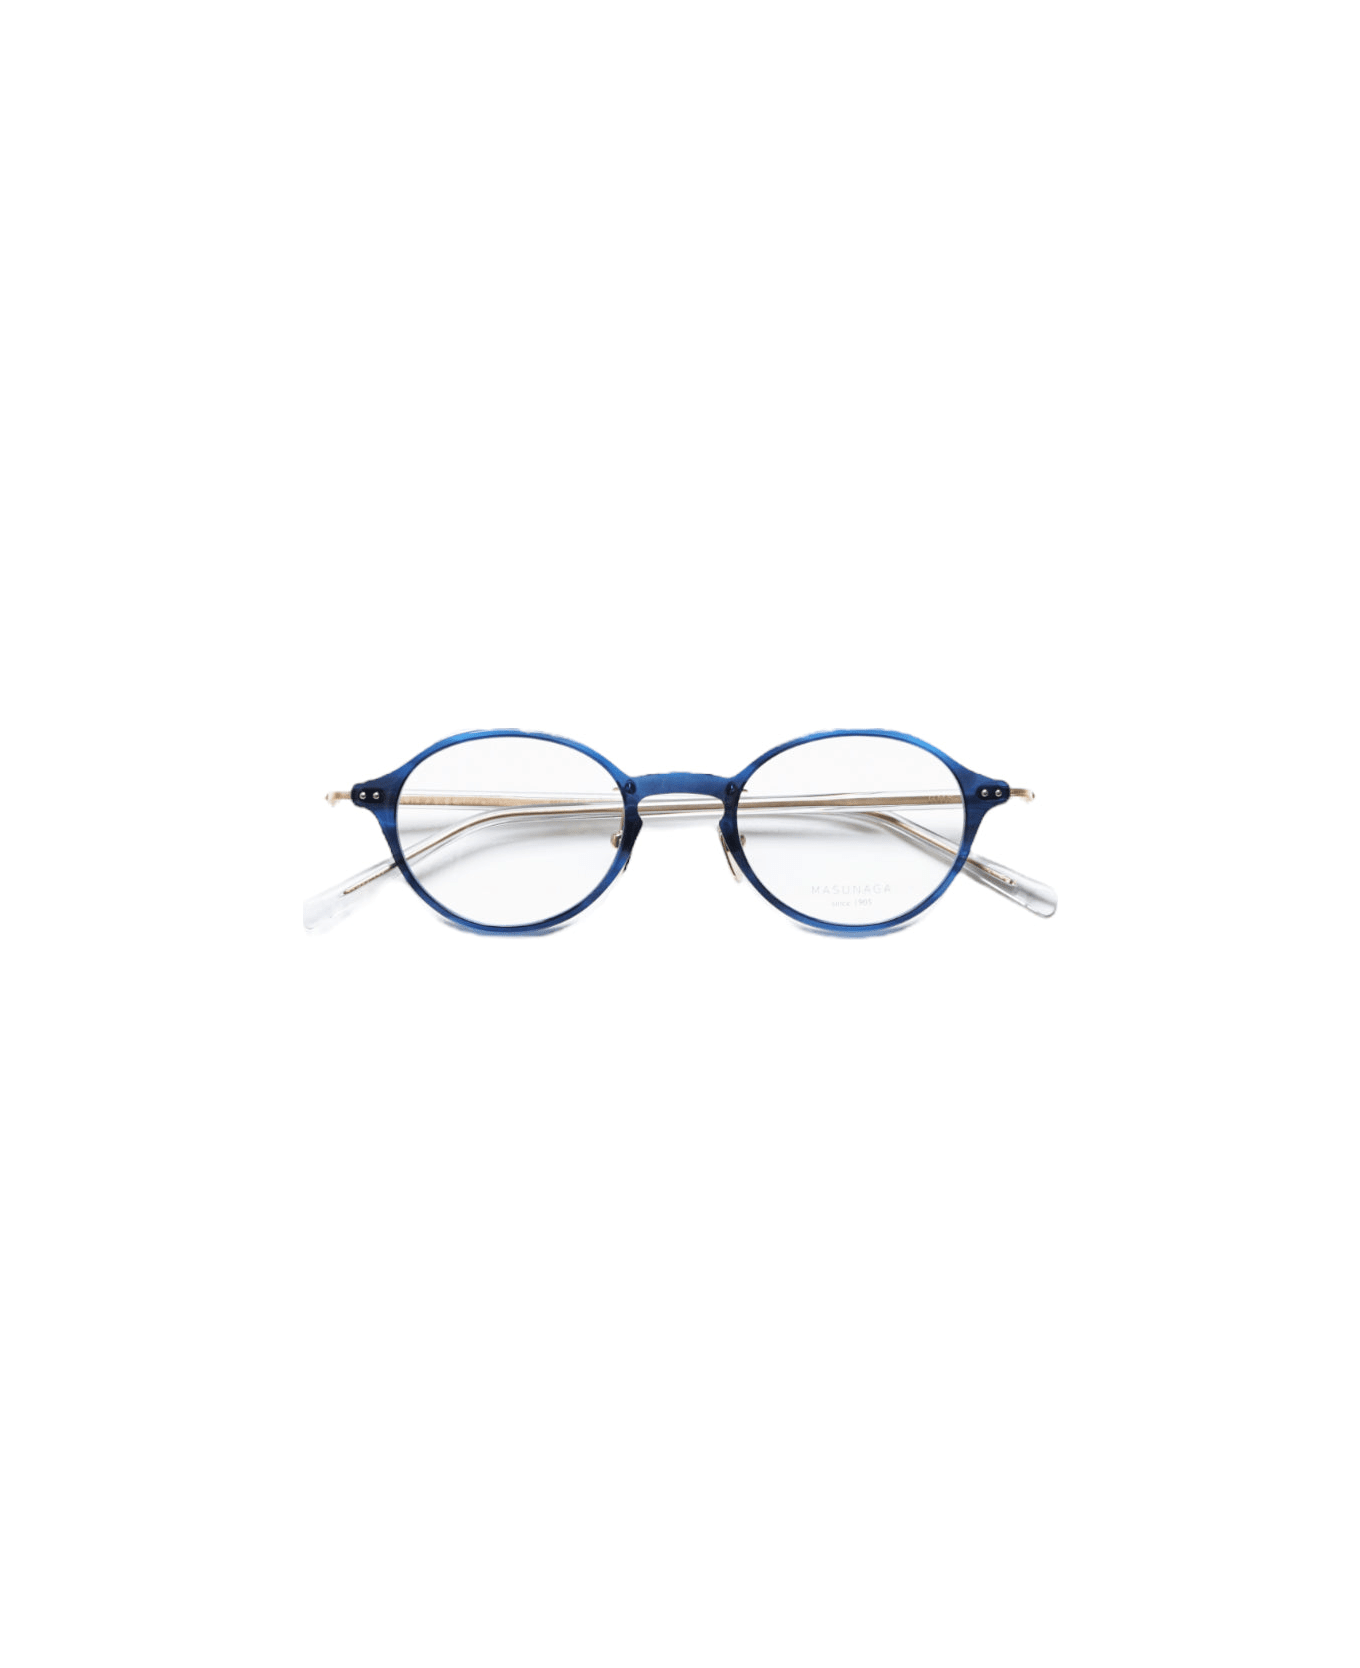 Masunaga Gms 830 - Blue Navy Glasses アイウェア